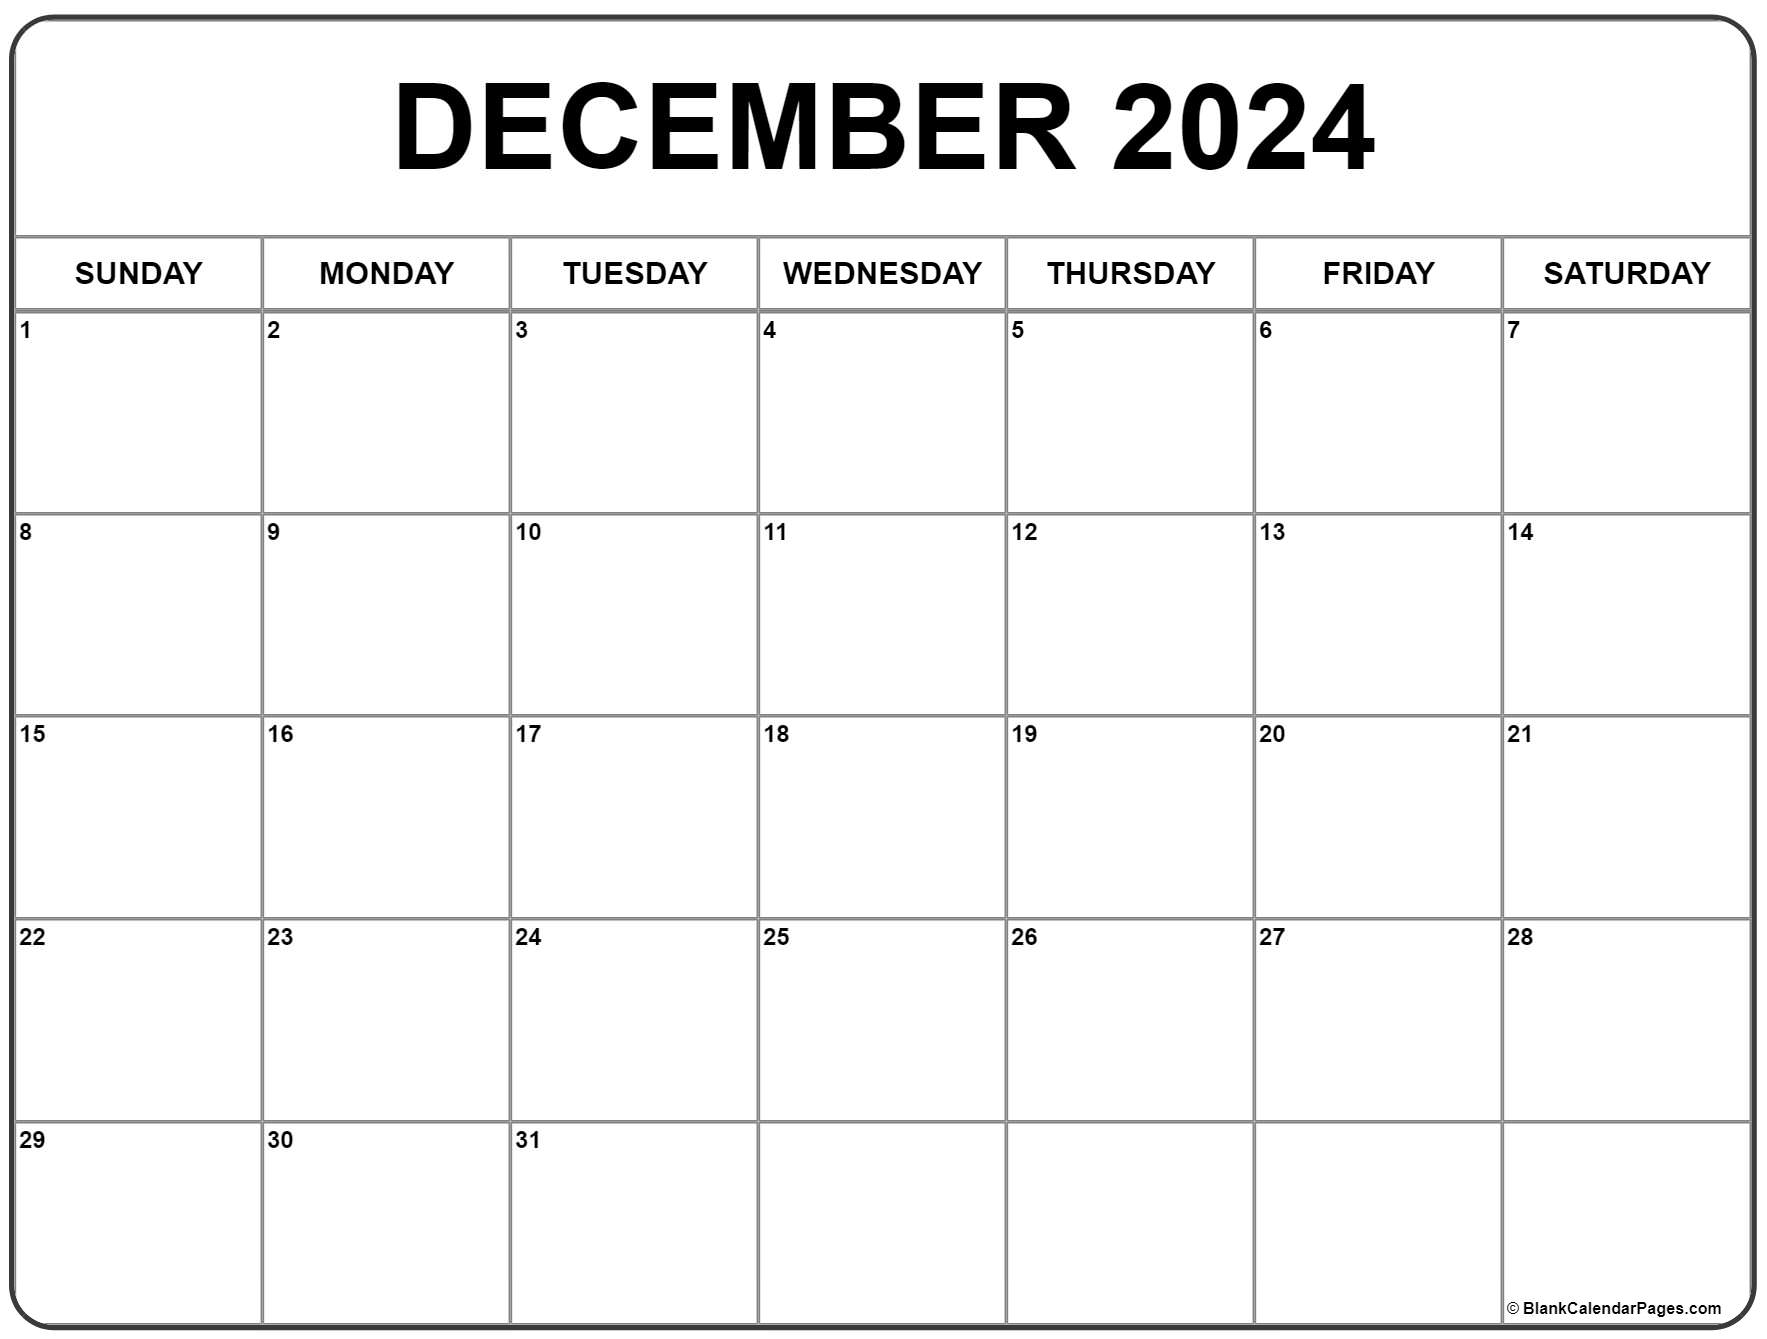 Free Printable December 2022 Calendar December 2022 Calendar | Free Printable Calendar Templates